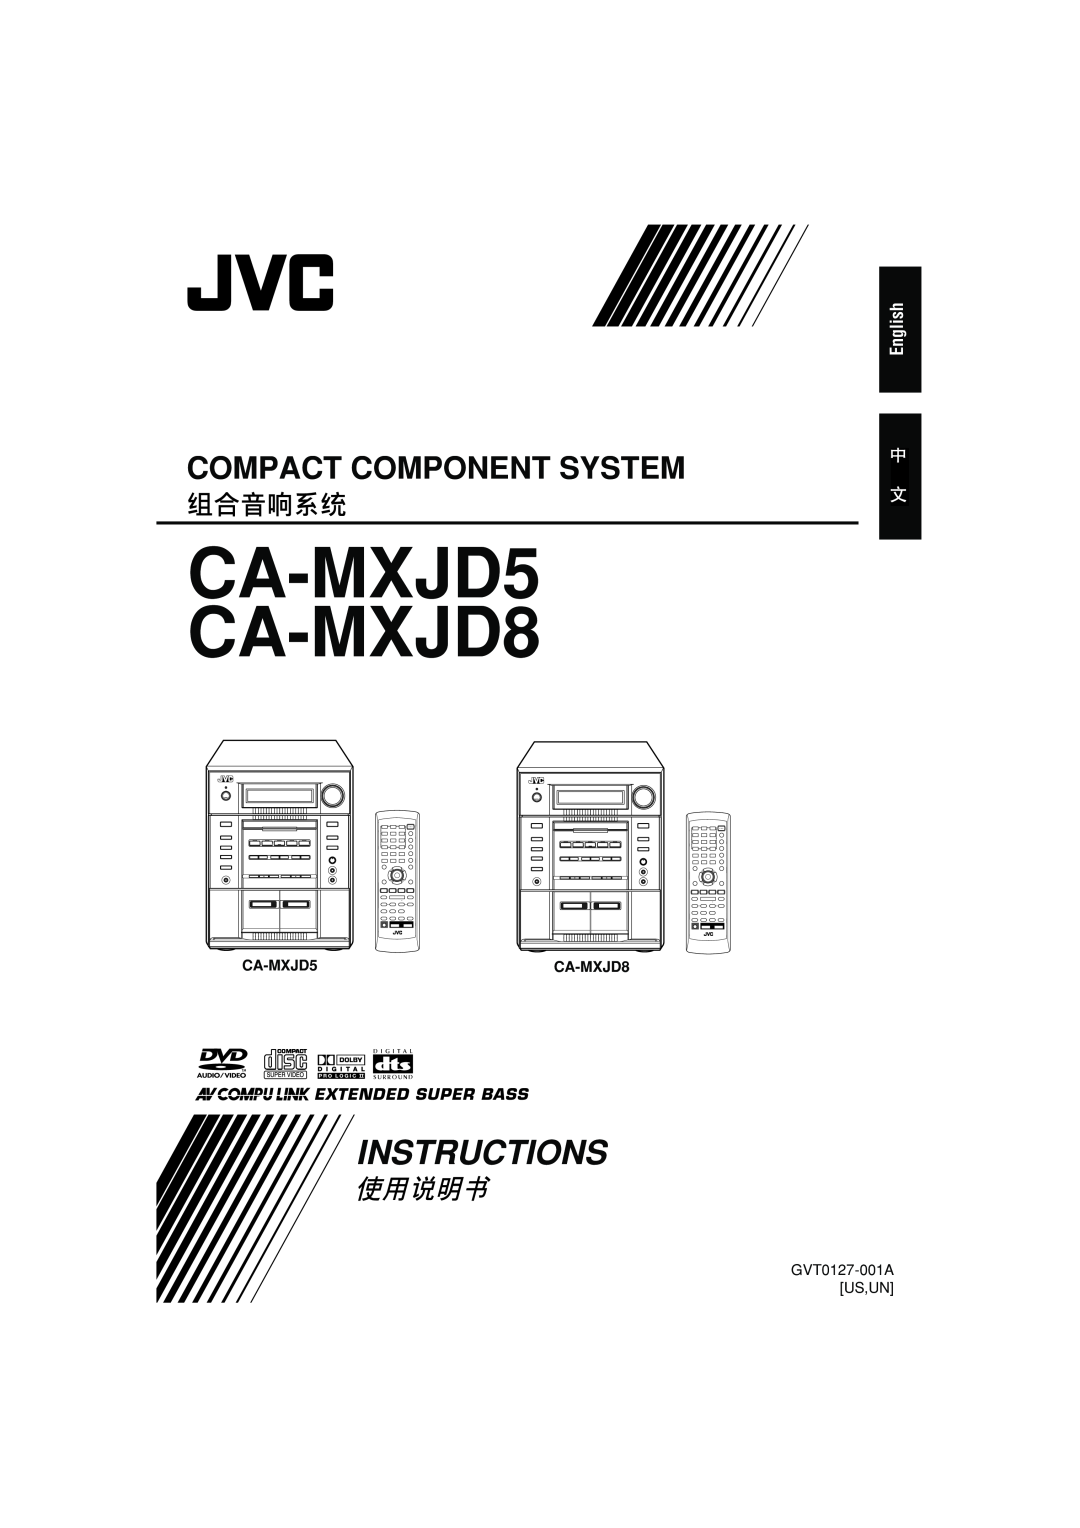 JVC CA-MXJD8UW manual CA-MXJD5 CA-MXJD8, Instructions, Compact Component System, English, Extended Super Bass 